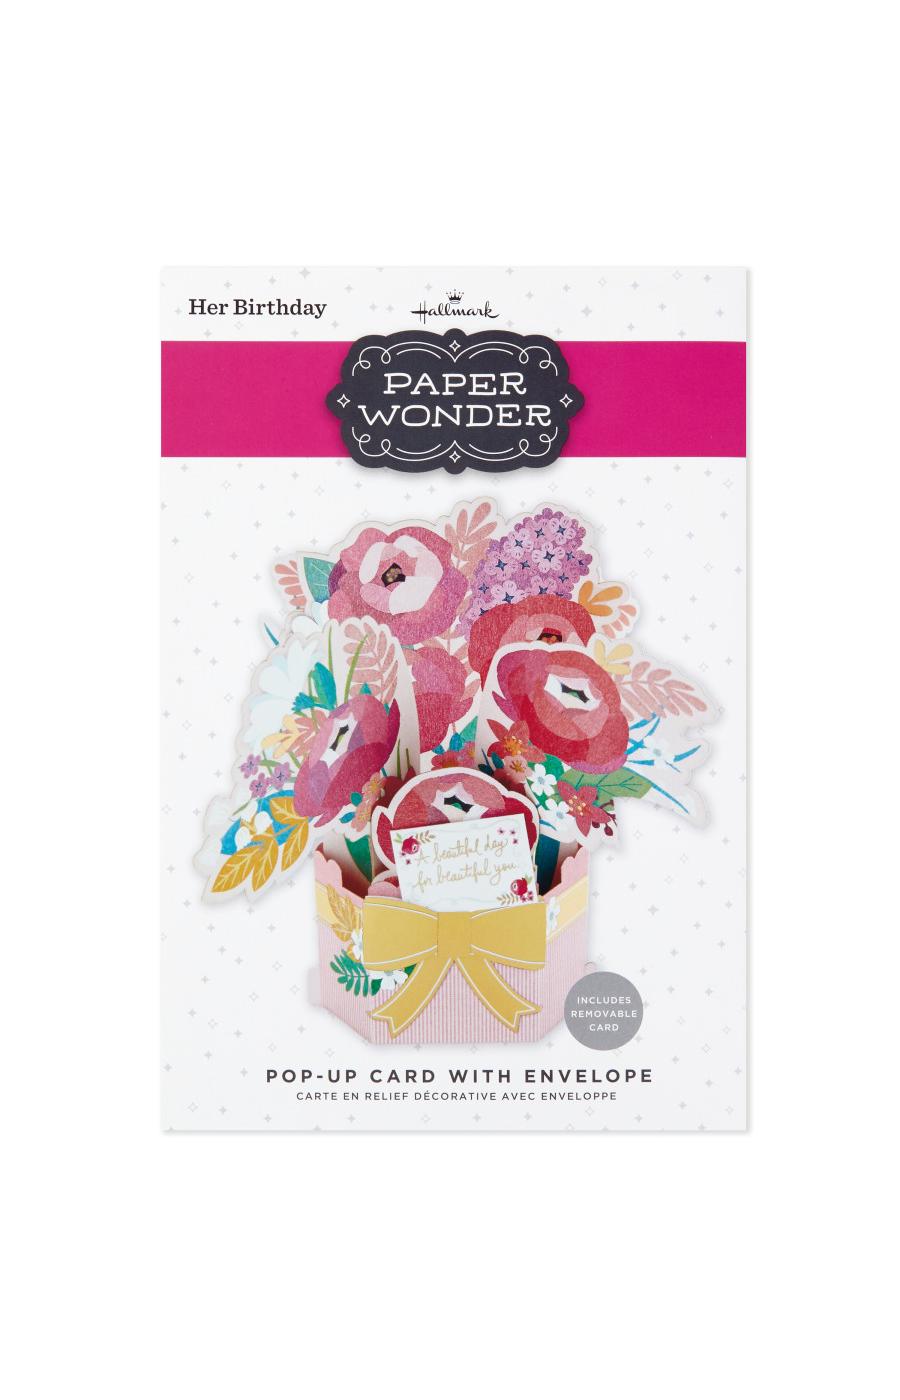 Hallmark Beautiful Day Paper Wonder Pop-Up 3D Birthday Card for